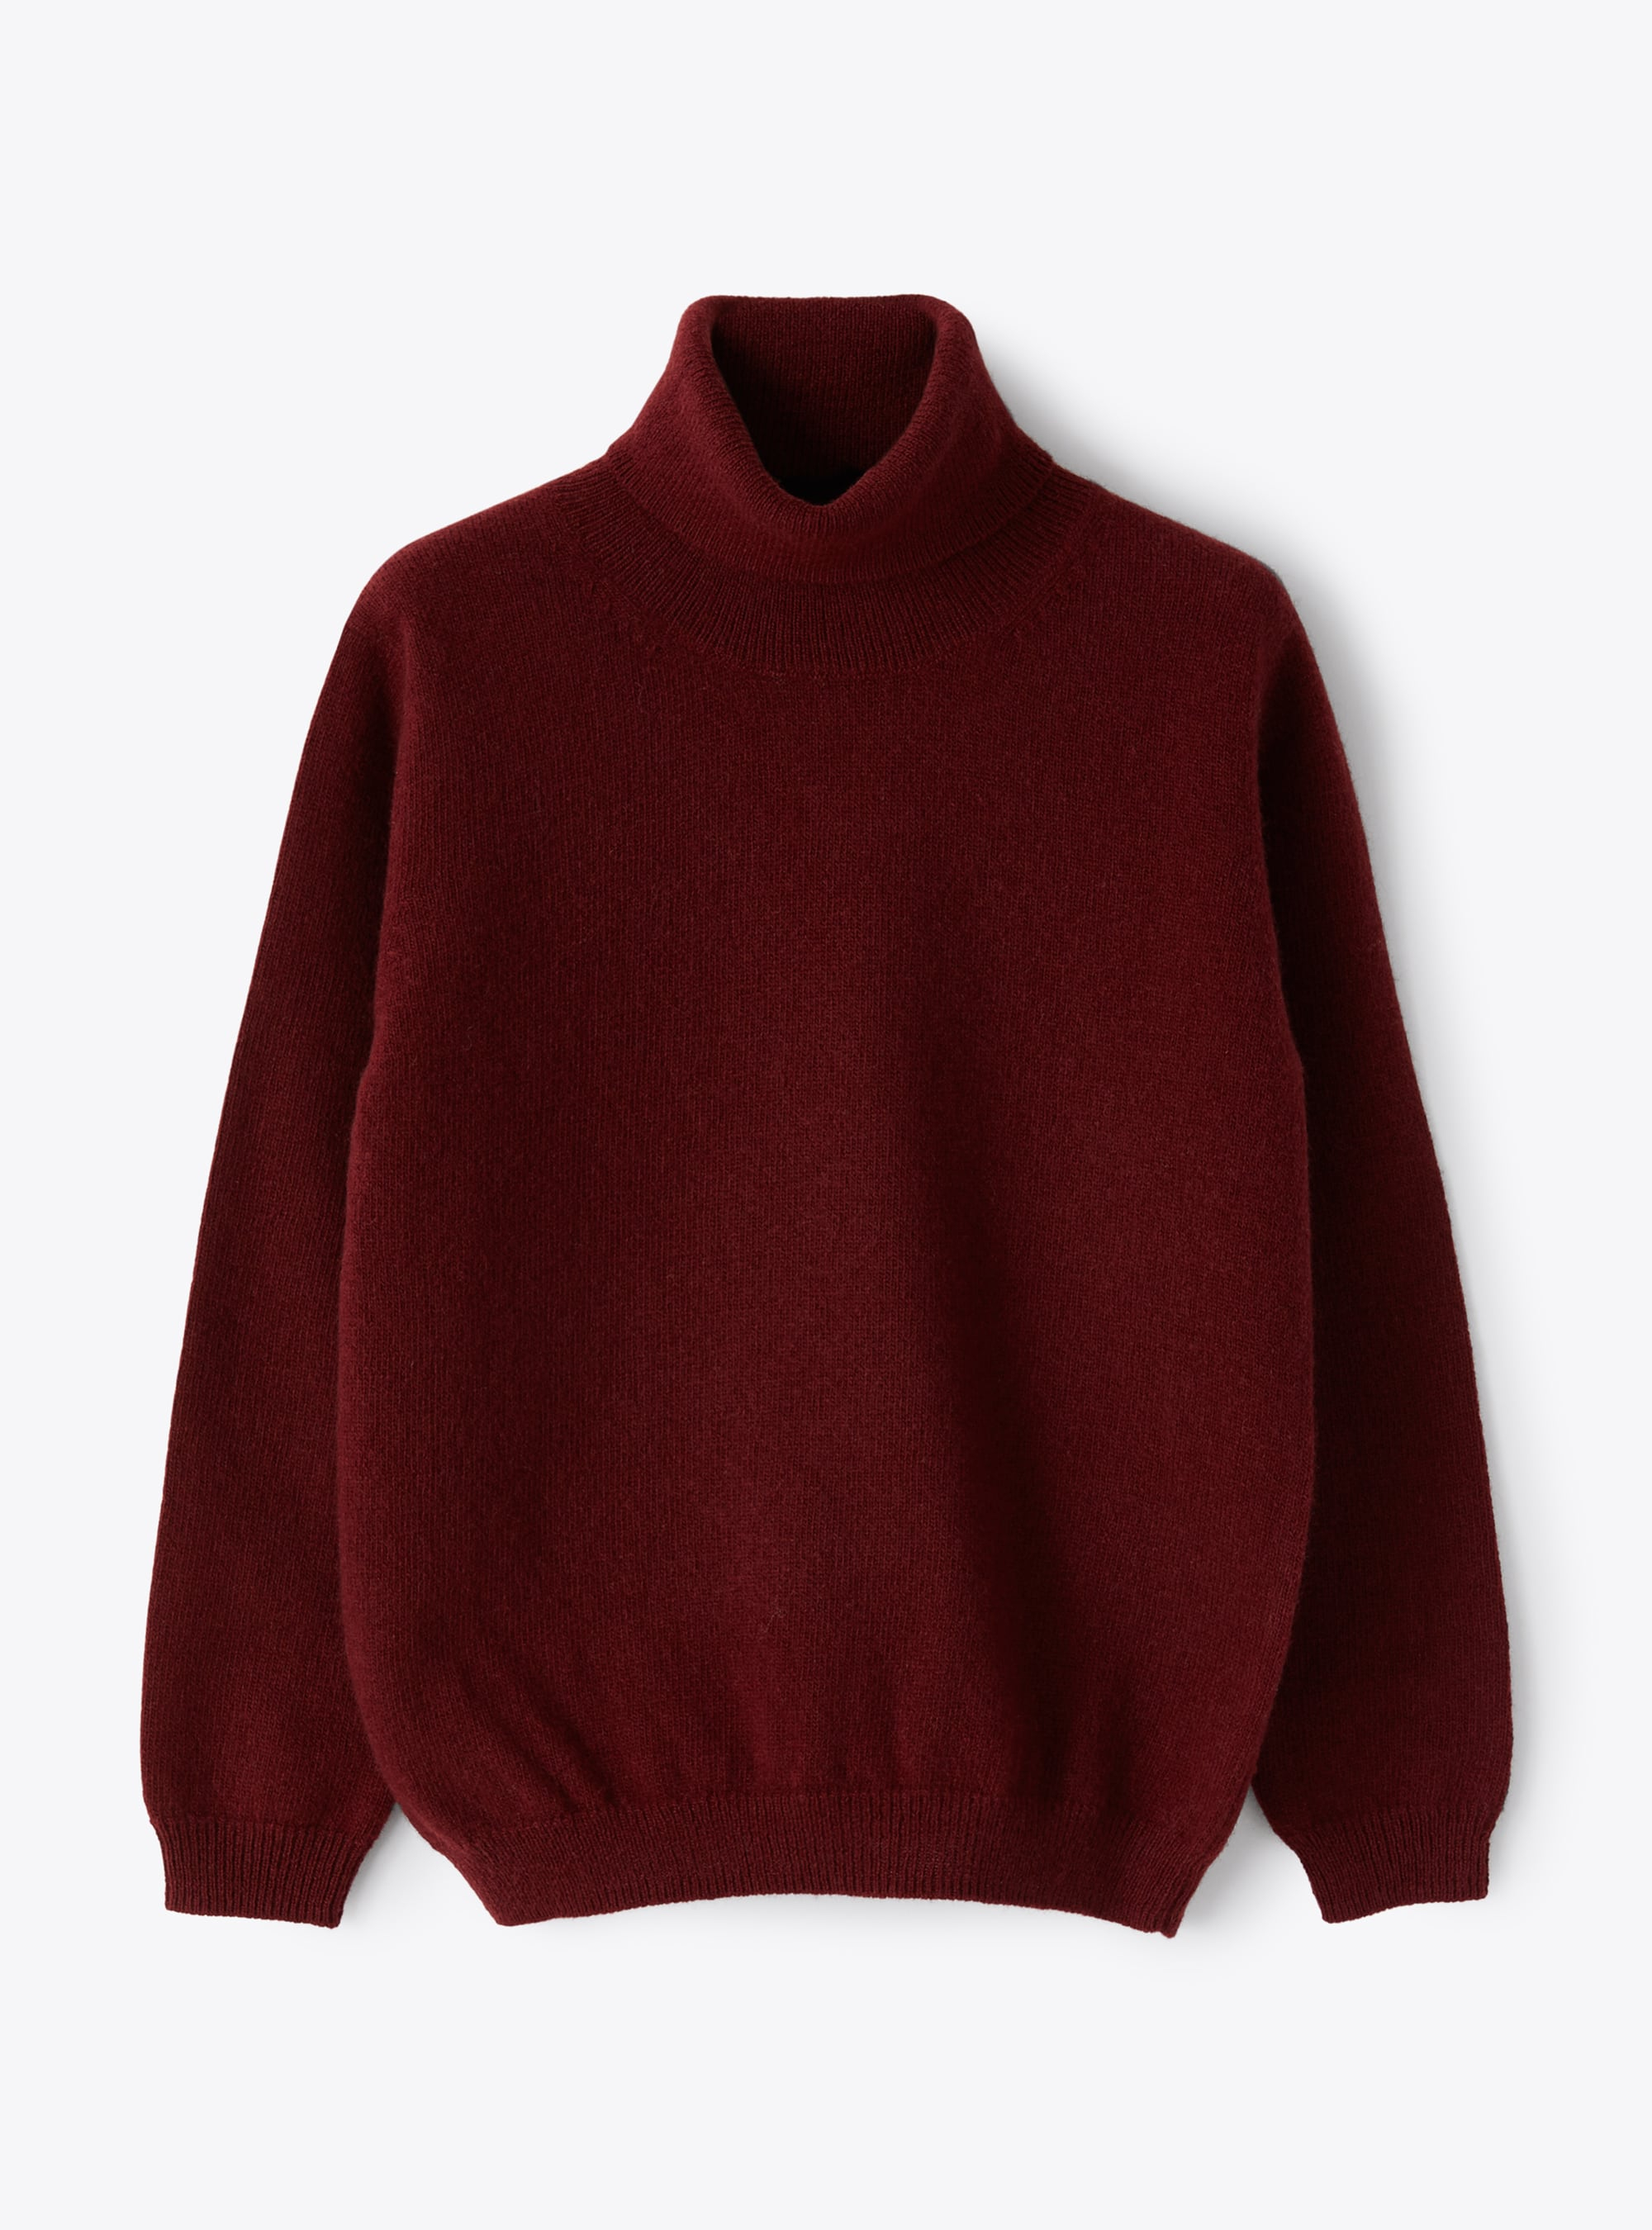 Burgundy merino wool turtleneck sweater - Sweaters - Il Gufo